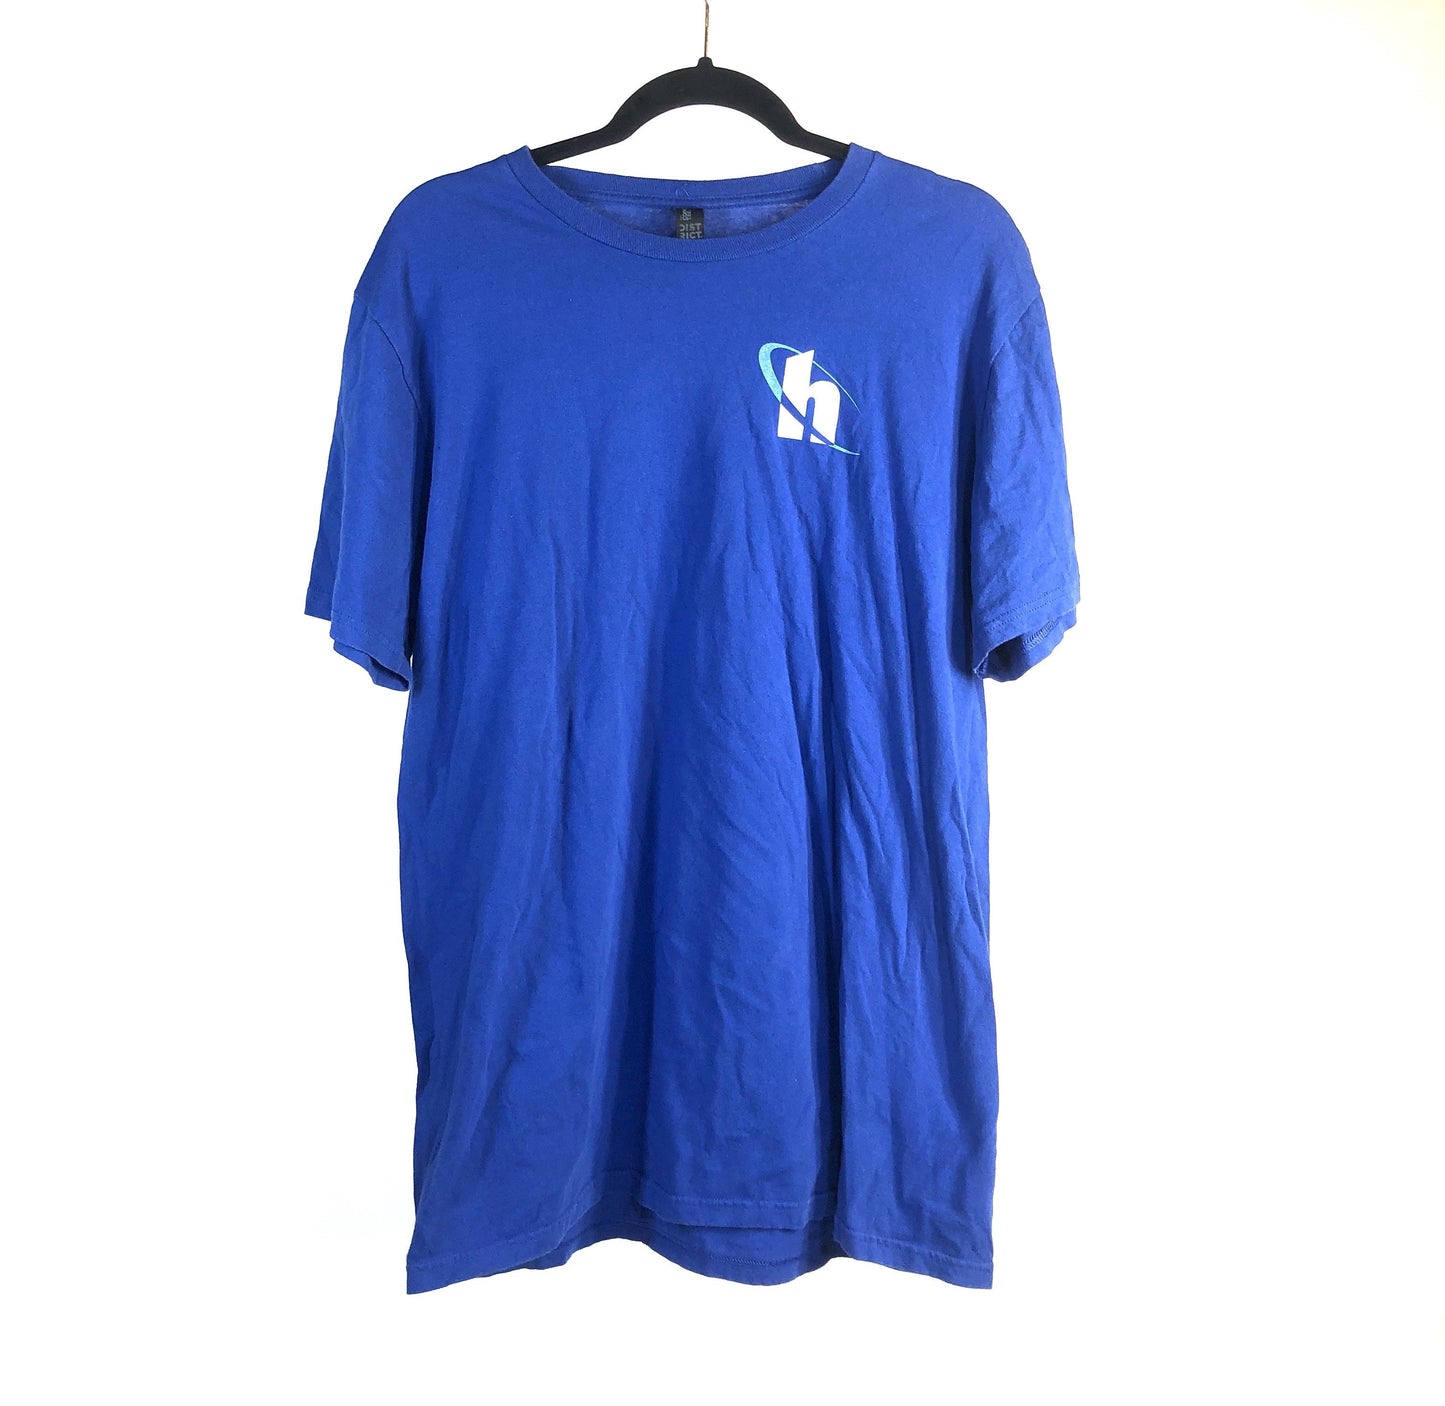 SILICON VALLEY: Blue Hooli "h" Shirt